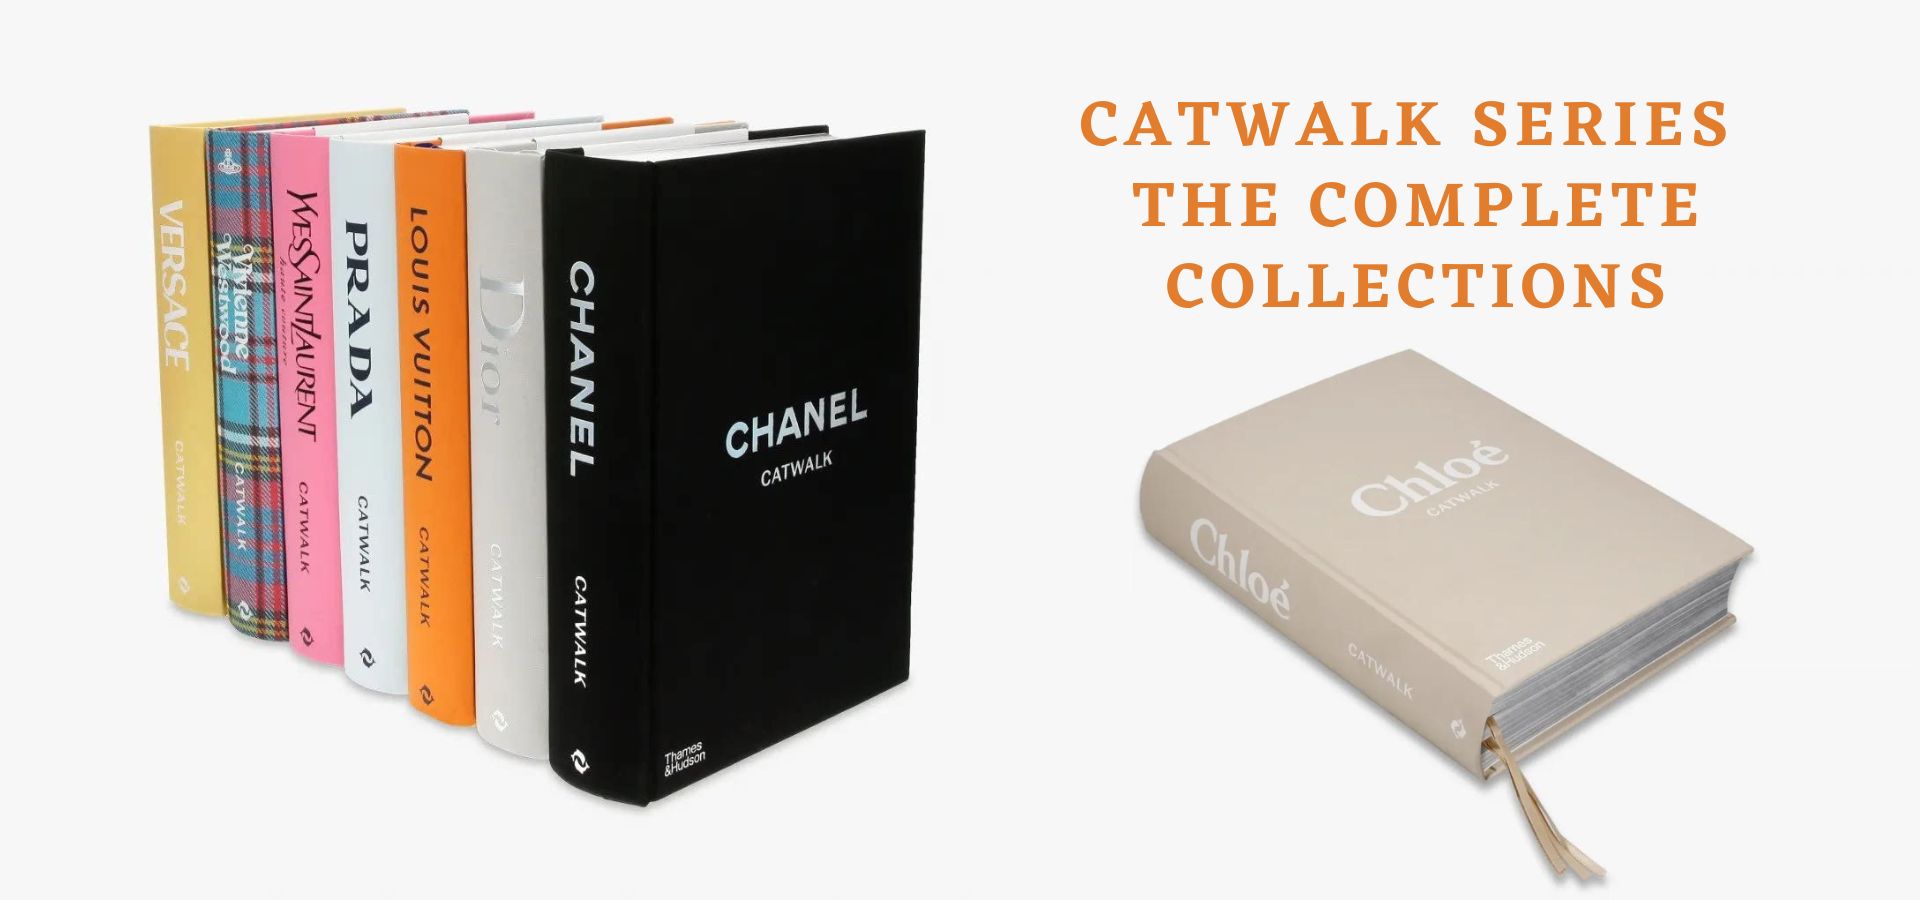 Buy Dior Catwalk Book online in India